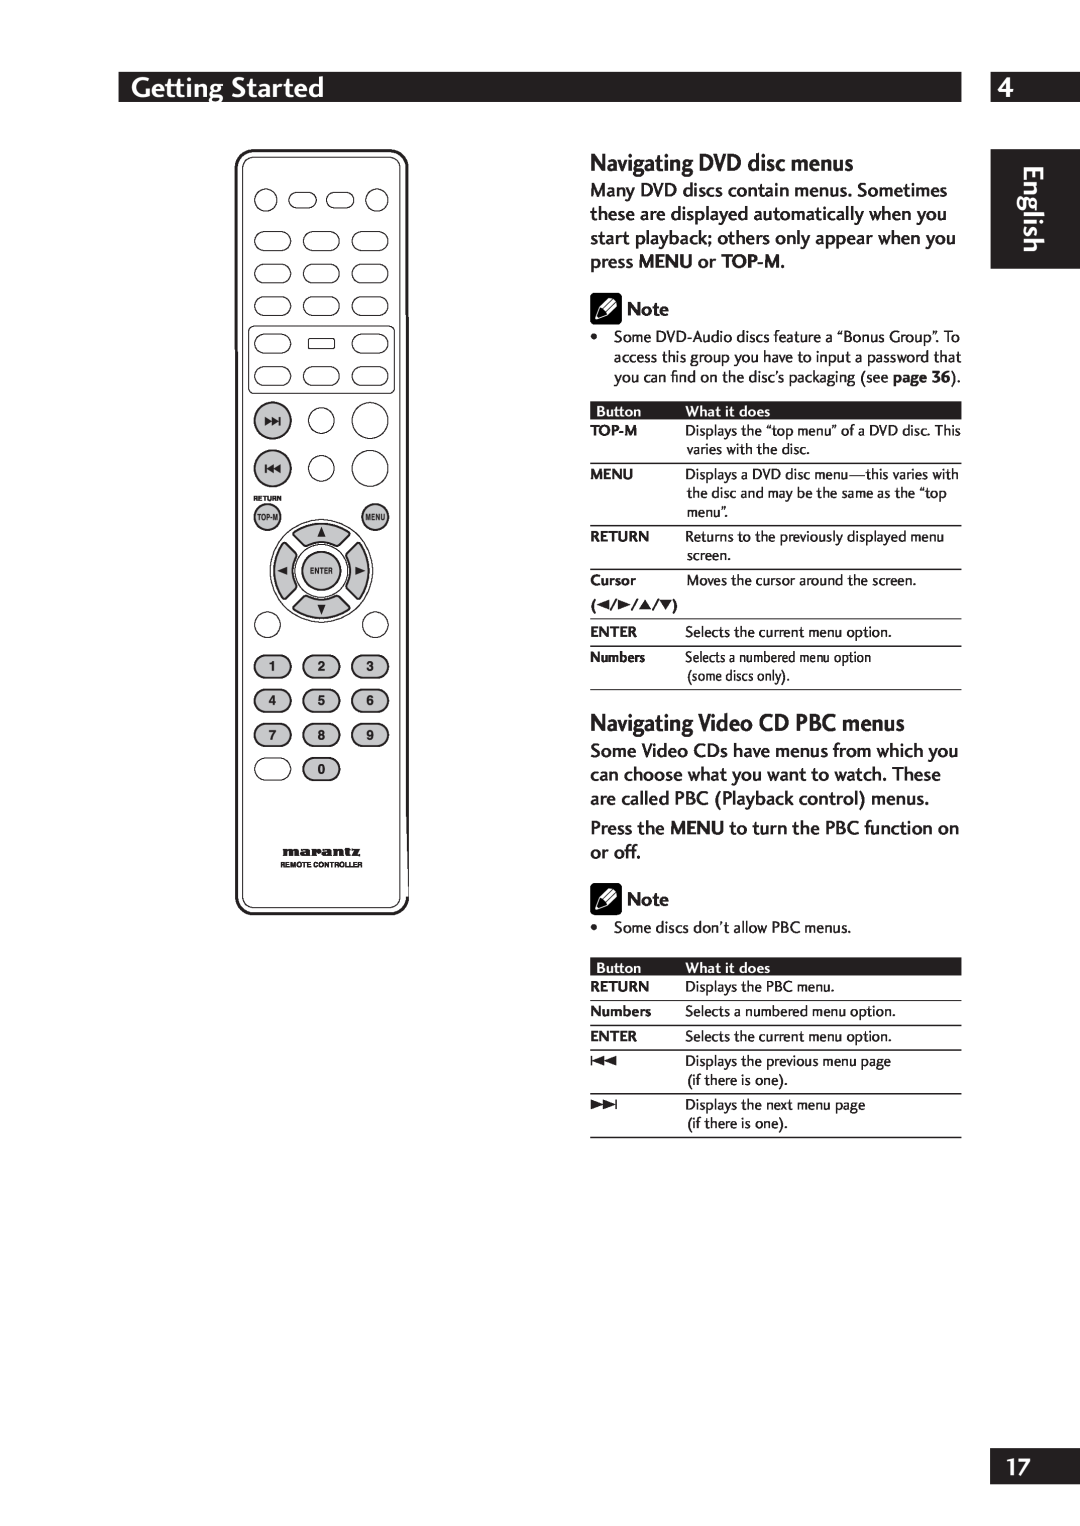 Marantz DV7001 manual Getting Started, Navigating DVD disc menus, Navigating Video CD PBC menus, English 